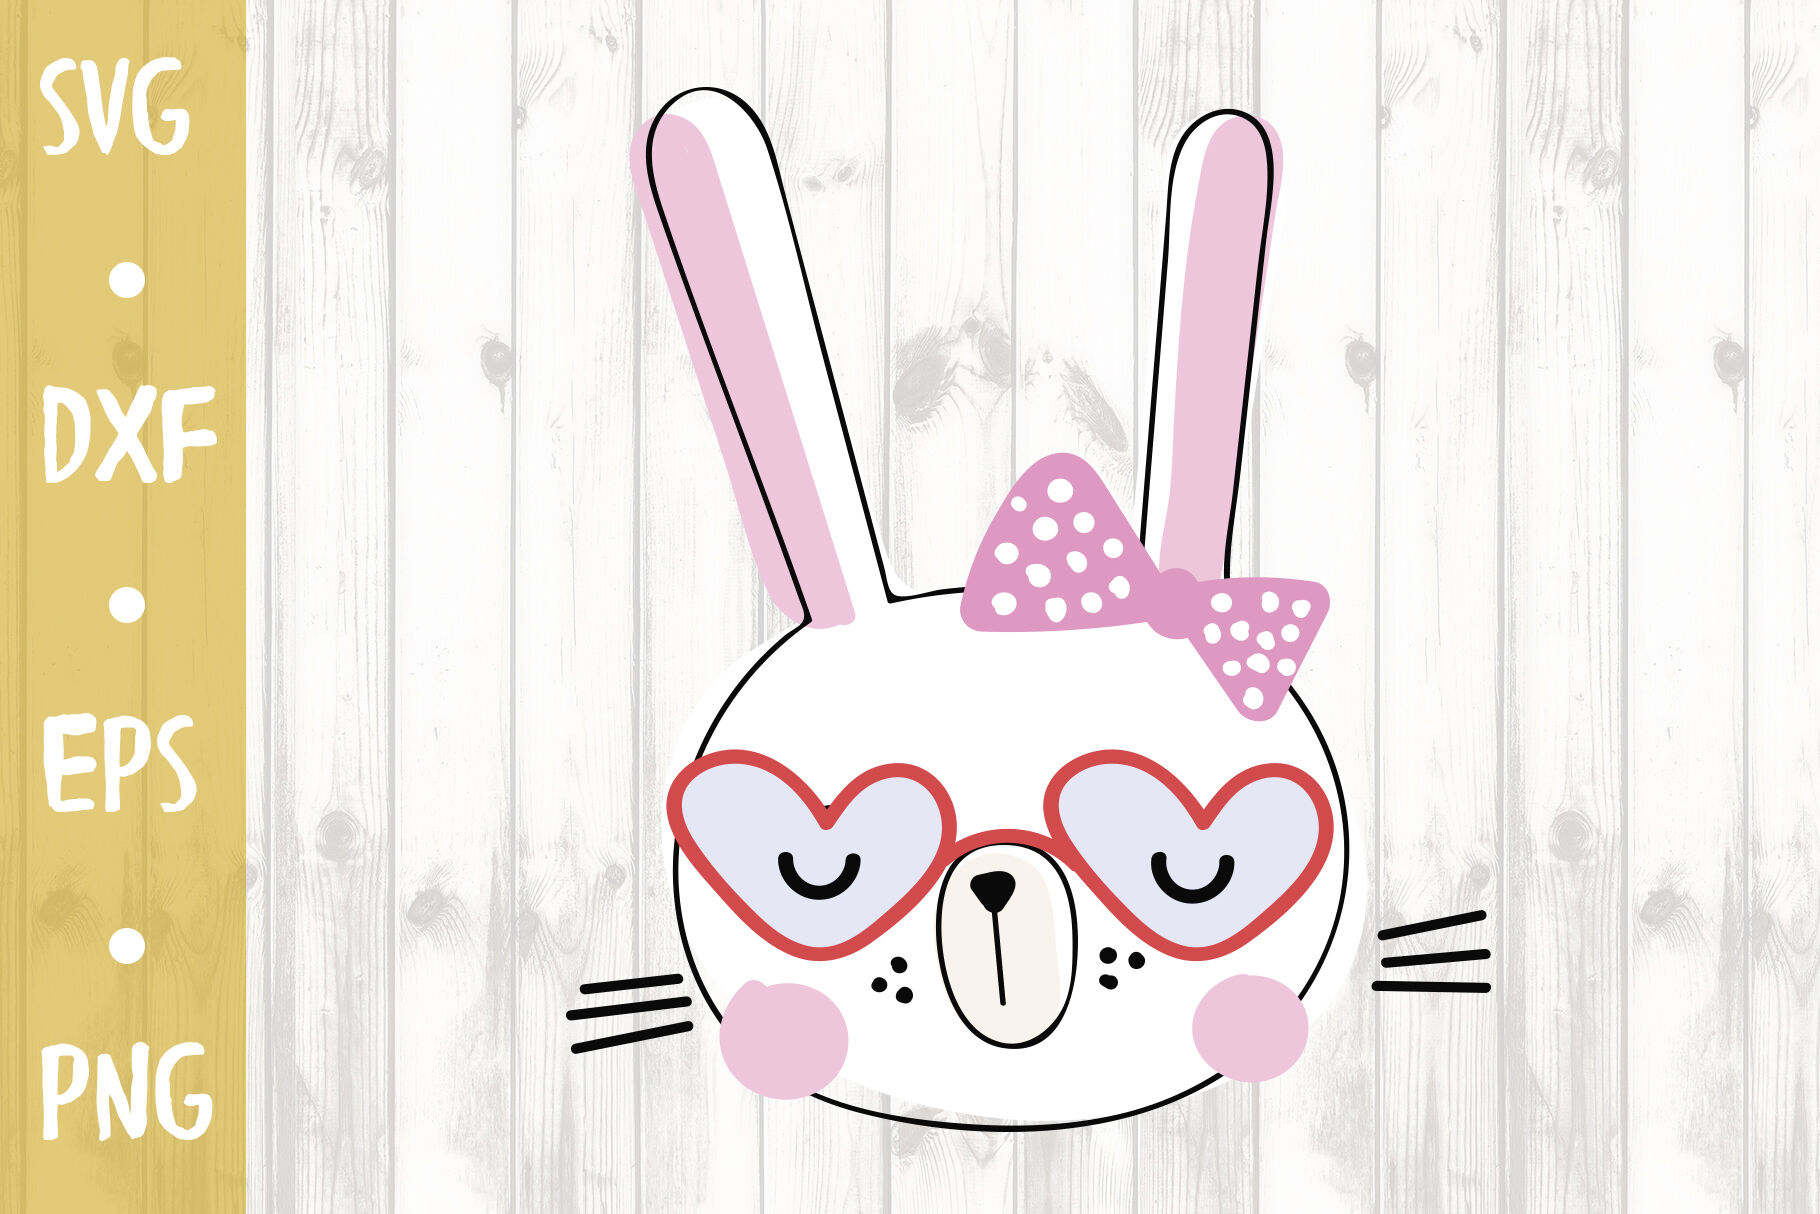 Cute Bunny - SVG CUT FILE By Milkimil | TheHungryJPEG.com